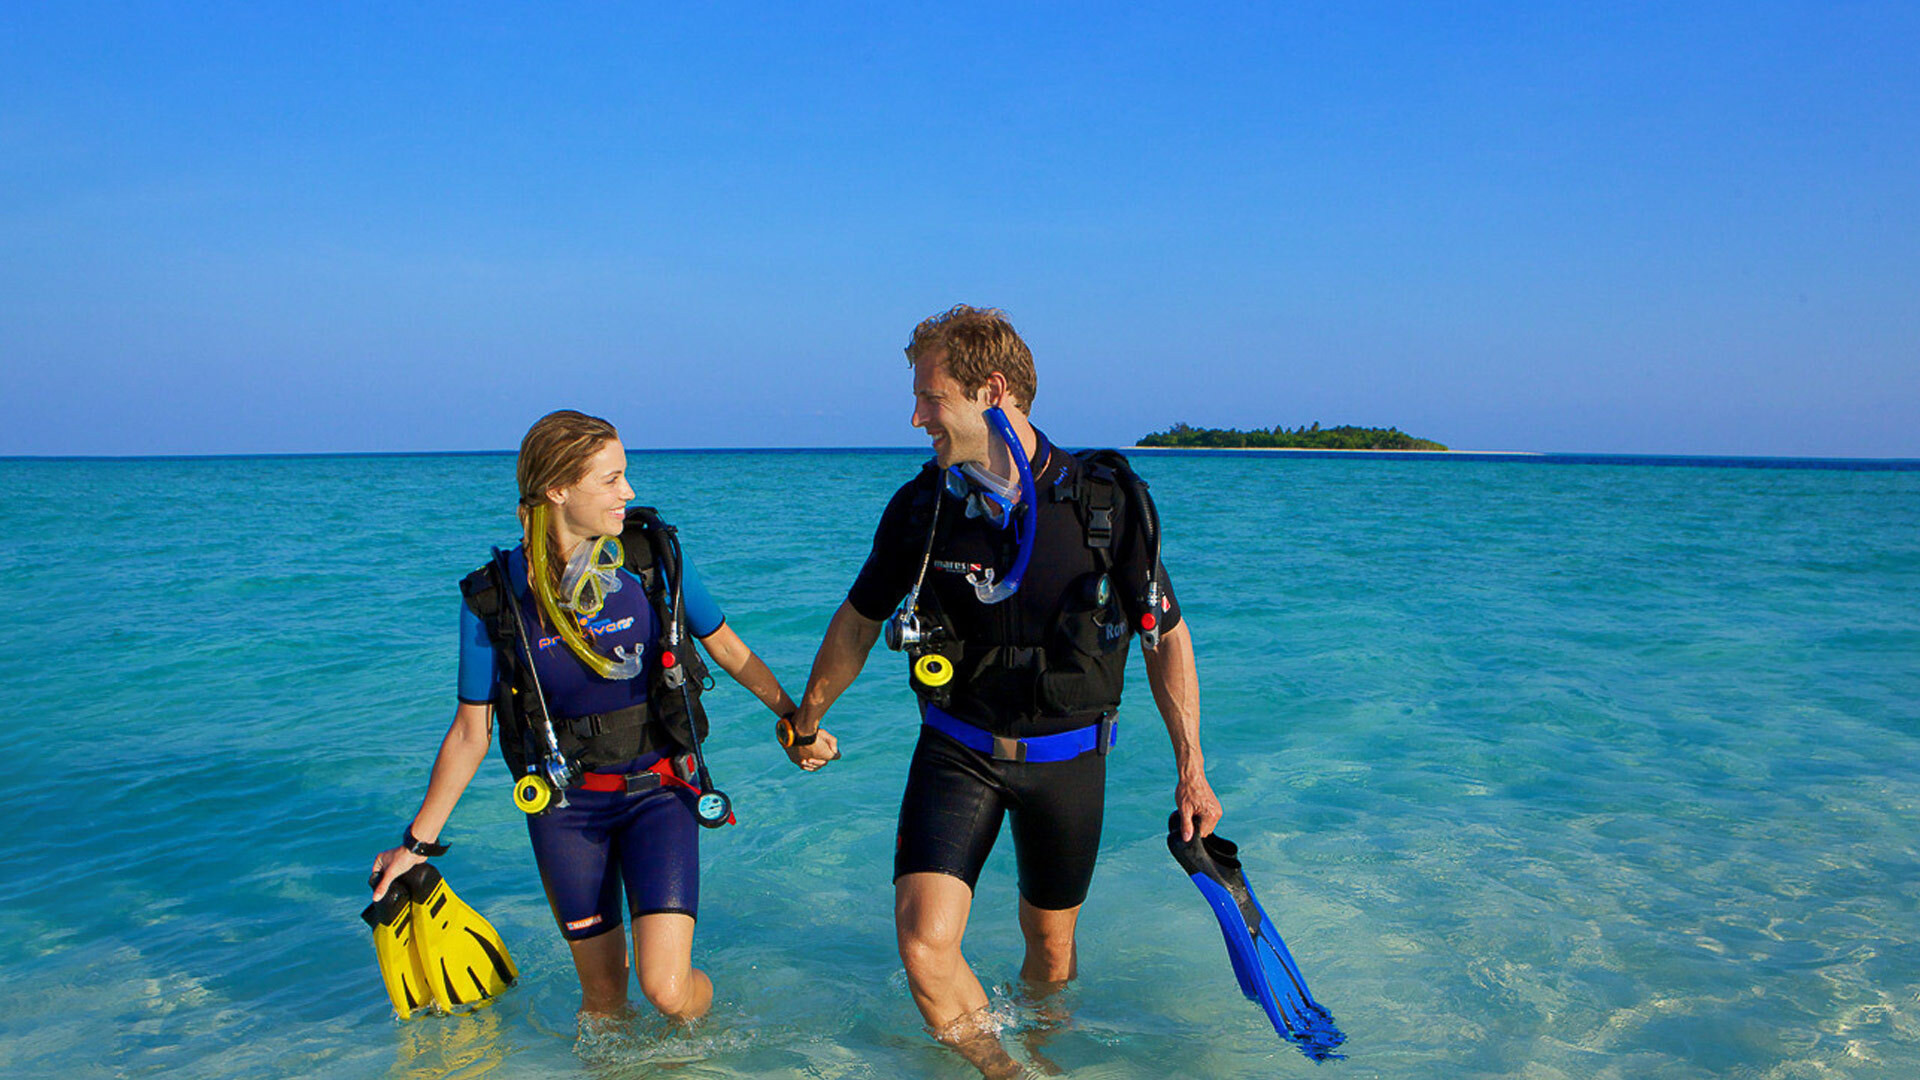 Pandemic honeymoon ideas in the Maldives